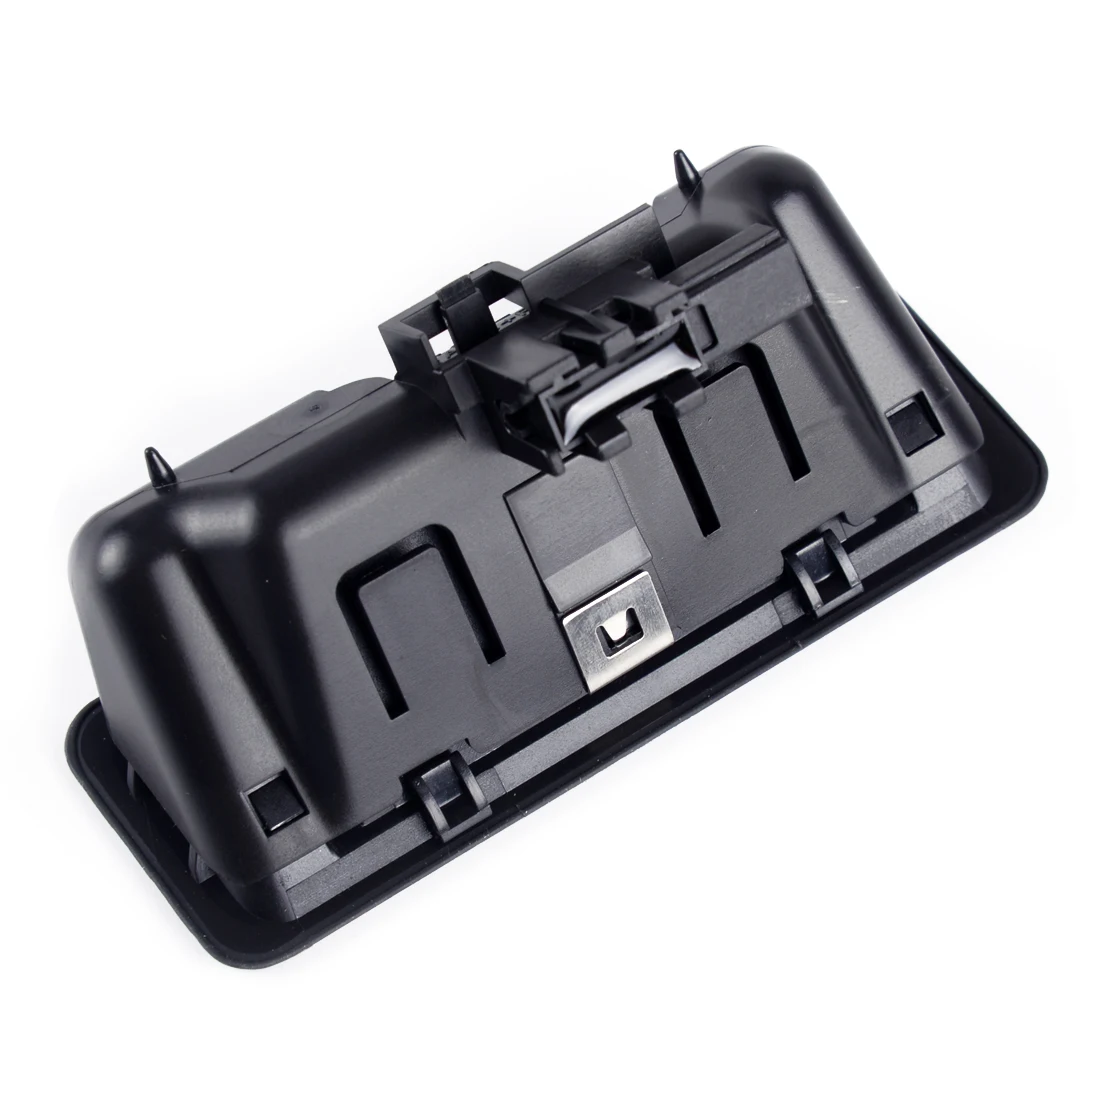 Beler Črna ABS vrata prtljažnika Prtljažnik Boot Izstopna odprtina Spustite Pokrov Pushbutton 51247118158 Primerni za BMW E90 E60 E70 E82 E88 E91 E93 E60 E61